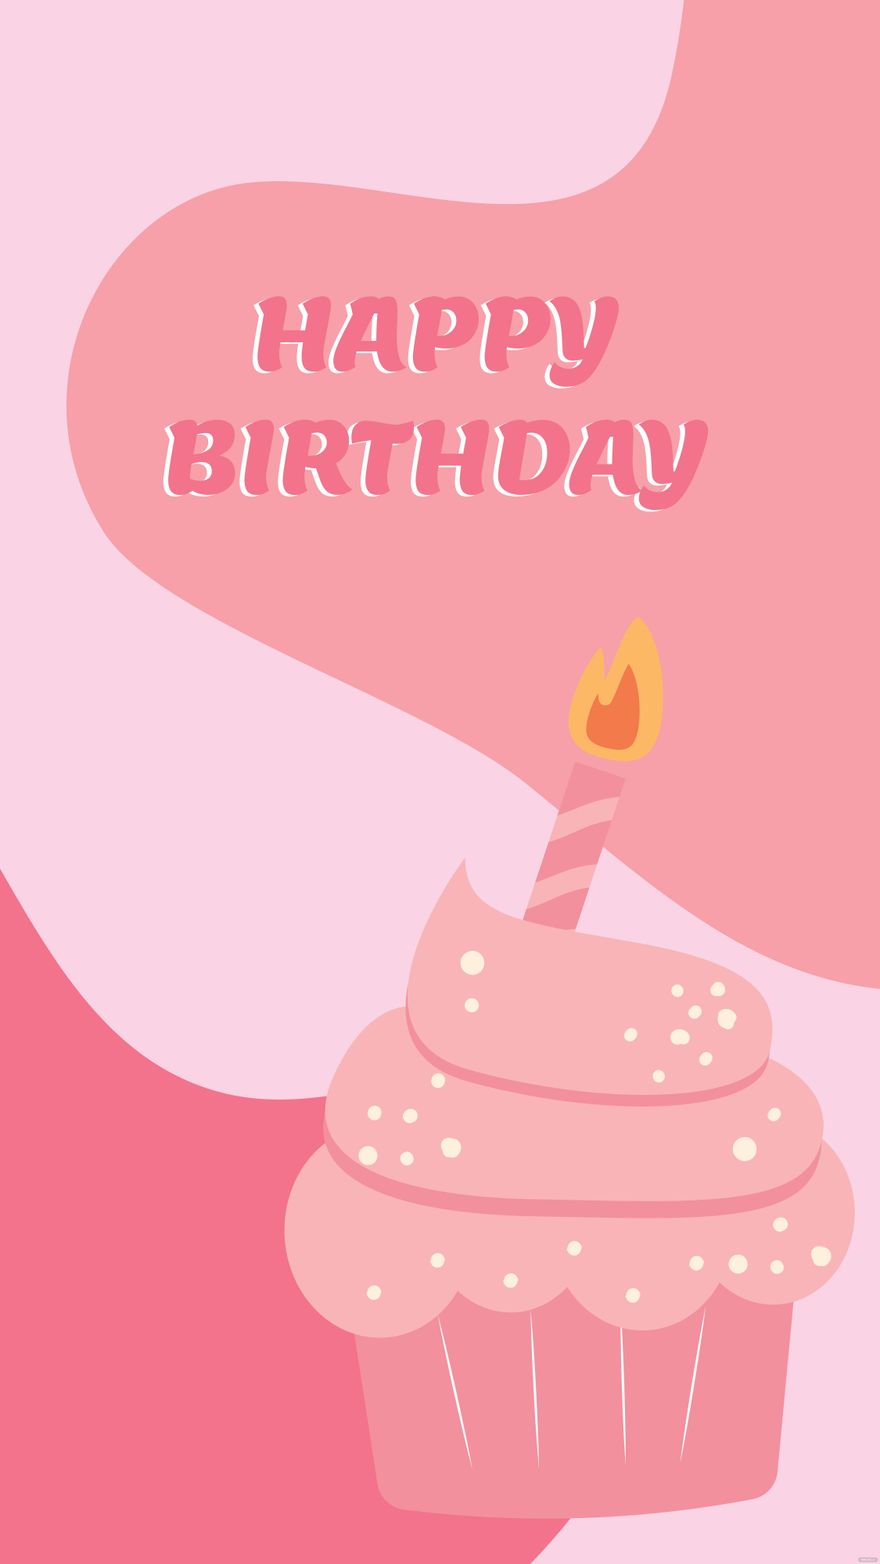 Birthday Background Images  Free Download on Freepik